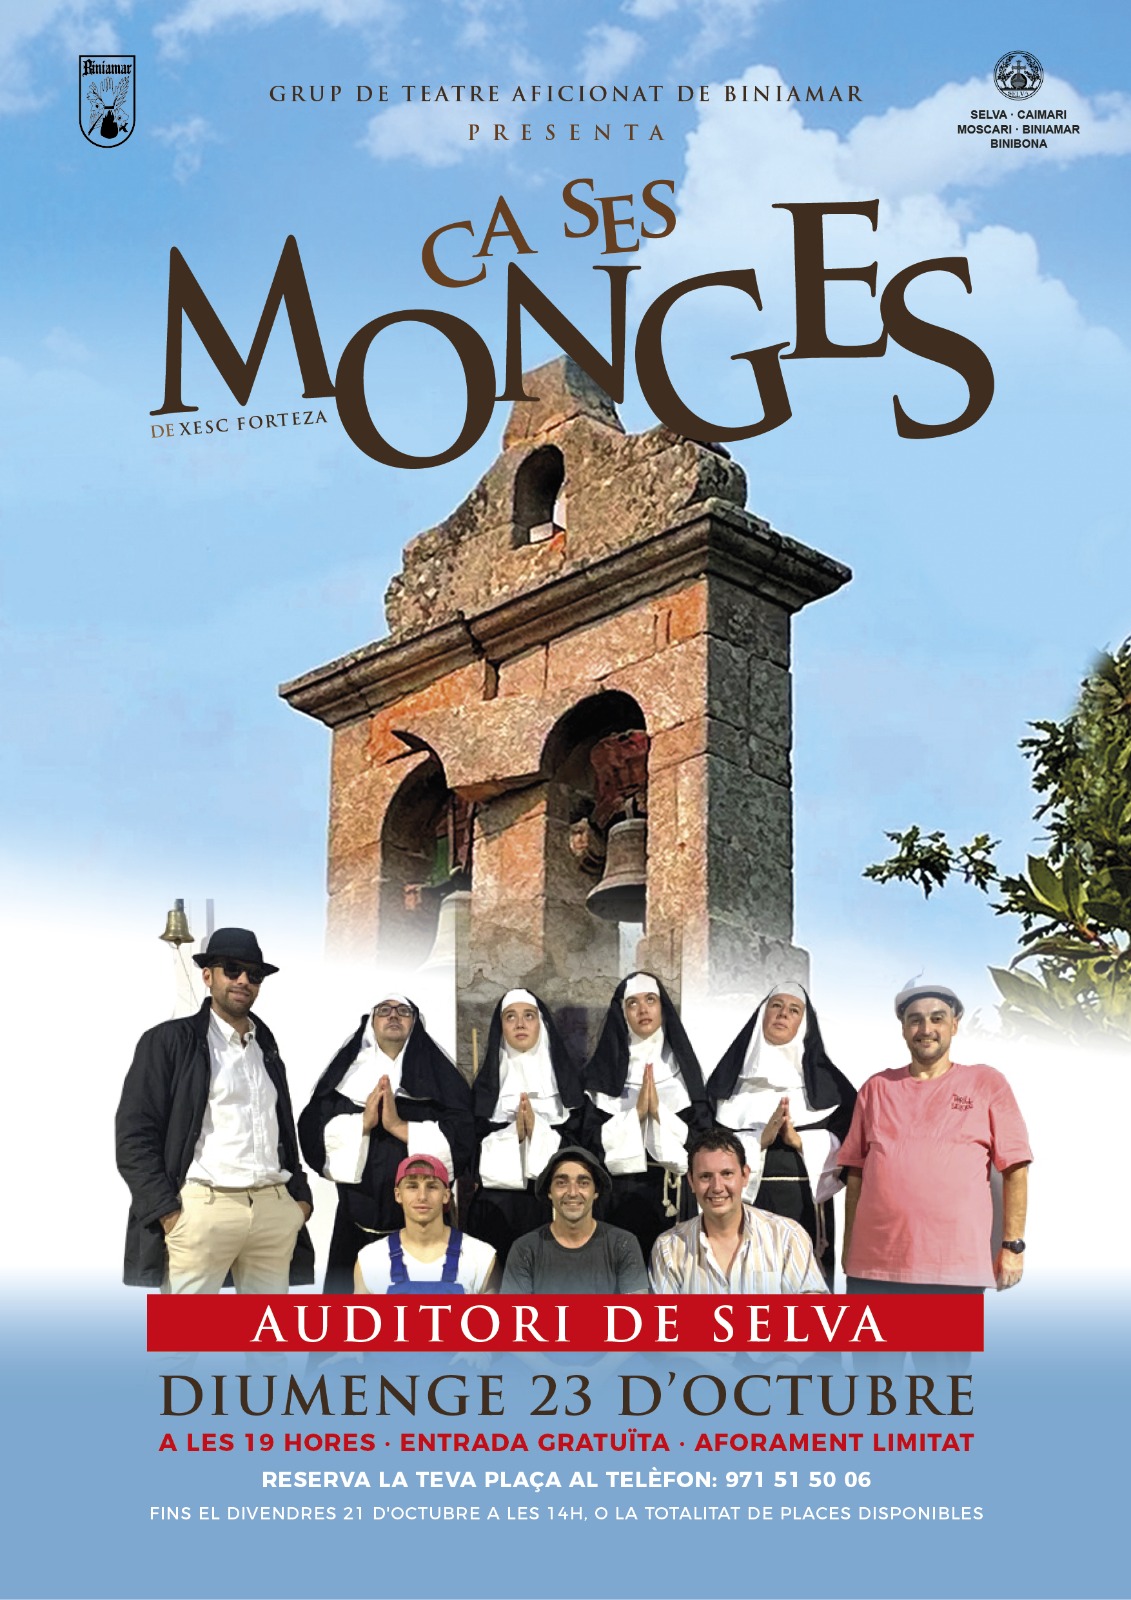 Grup de Teatre de Biniamar CA SES MONGES